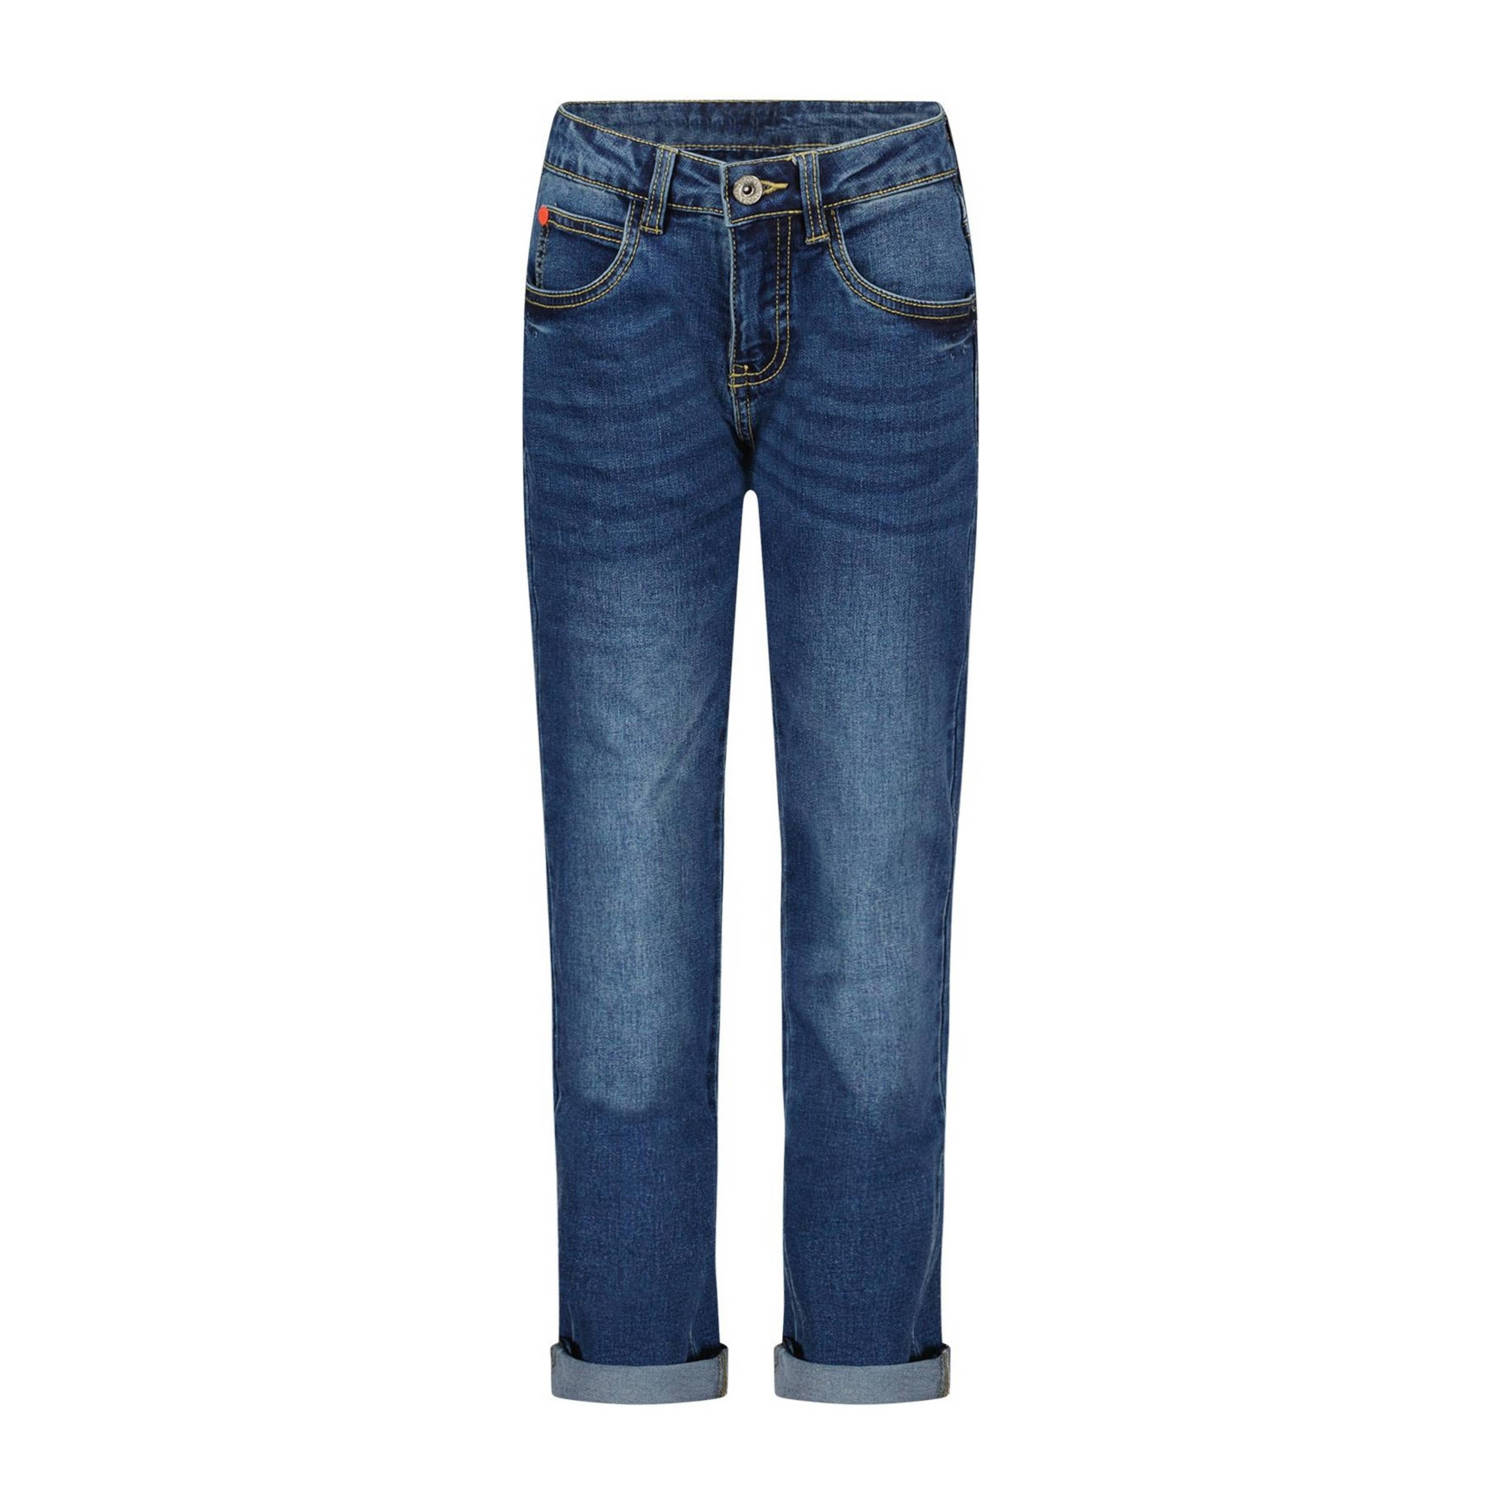 TYGO & vito straight fit jeans Boaz medium blue denim